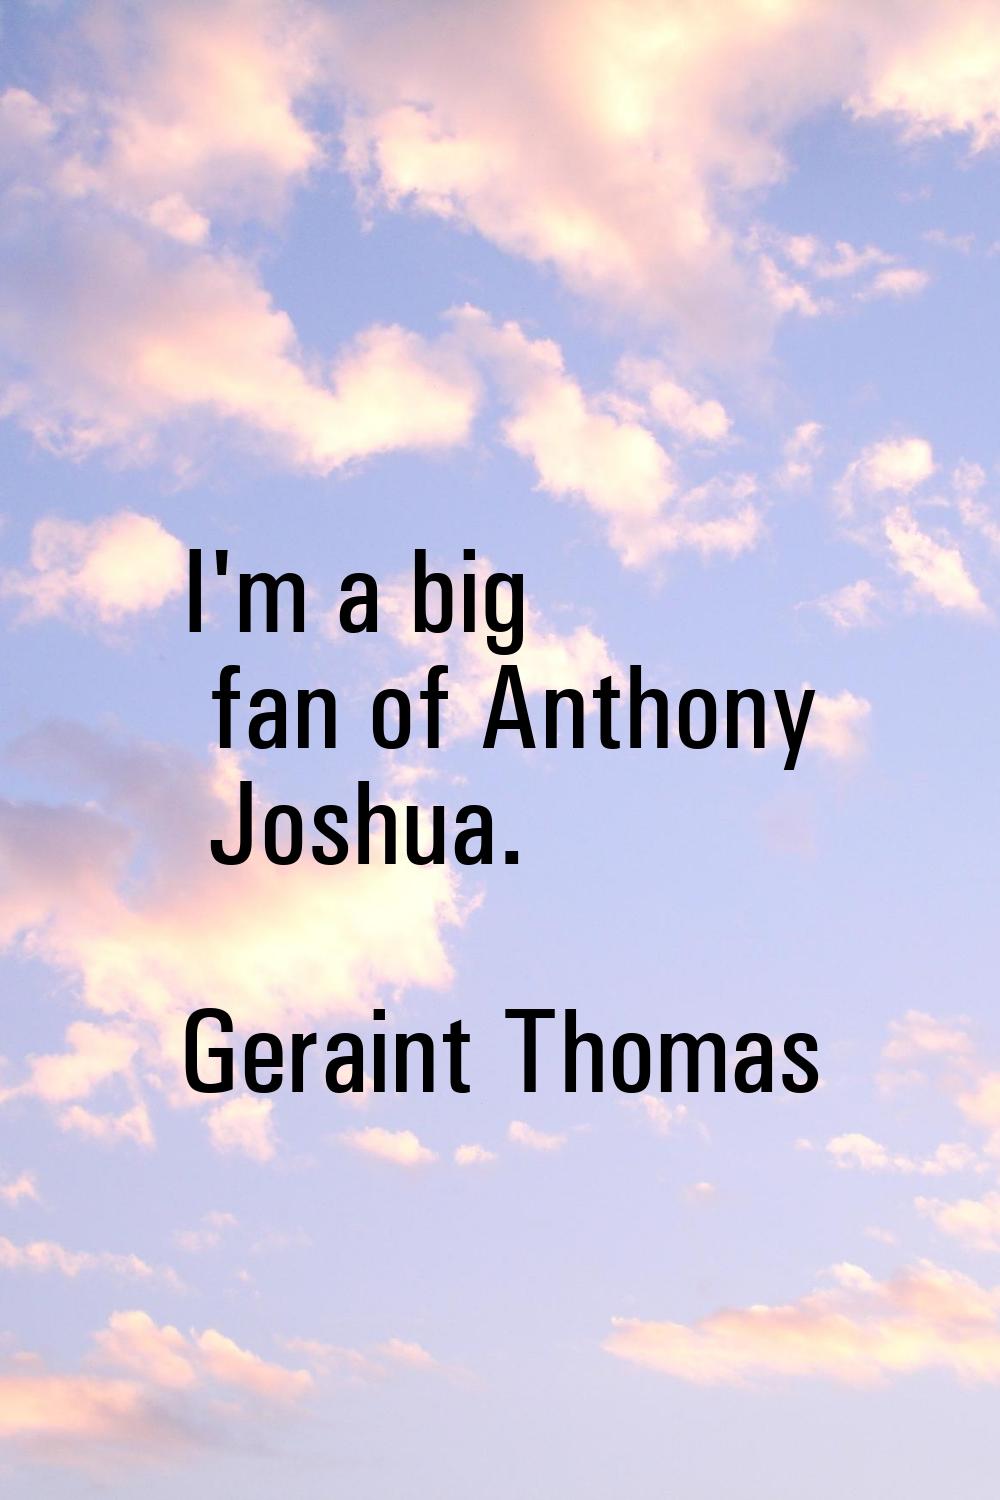 I'm a big fan of Anthony Joshua.